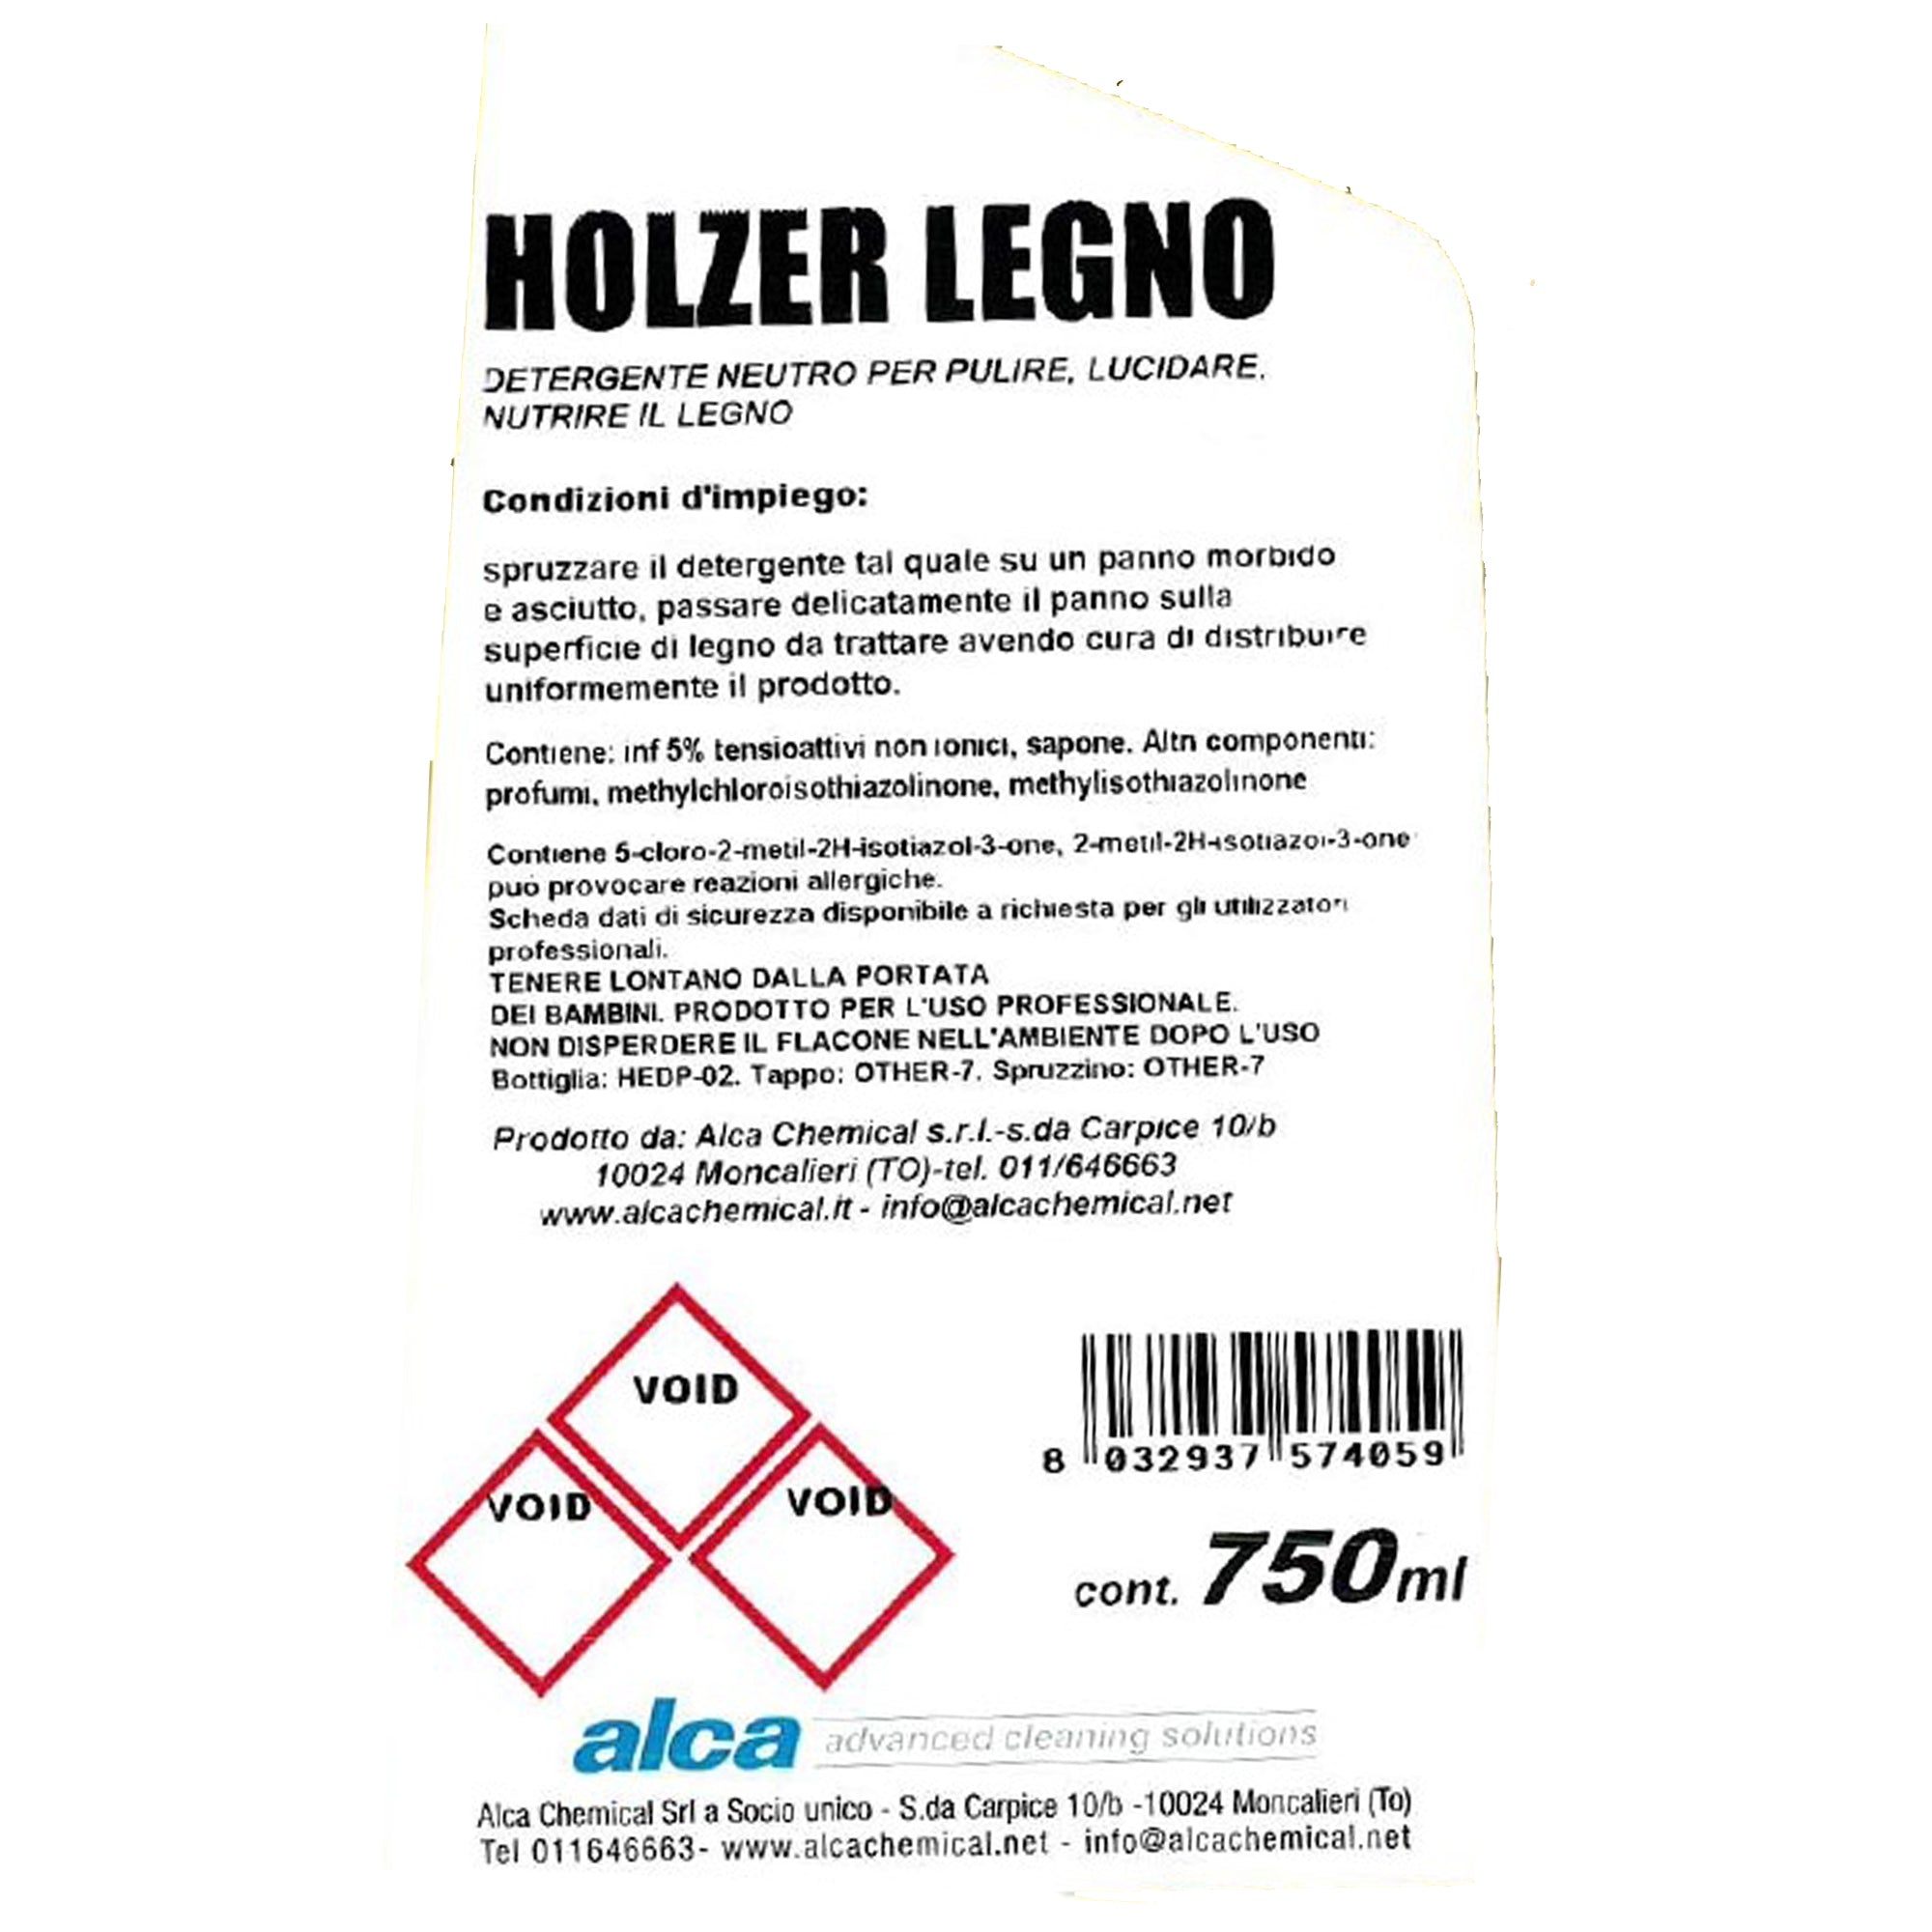 alca-detergente-legno-holzer-trigger-750ml